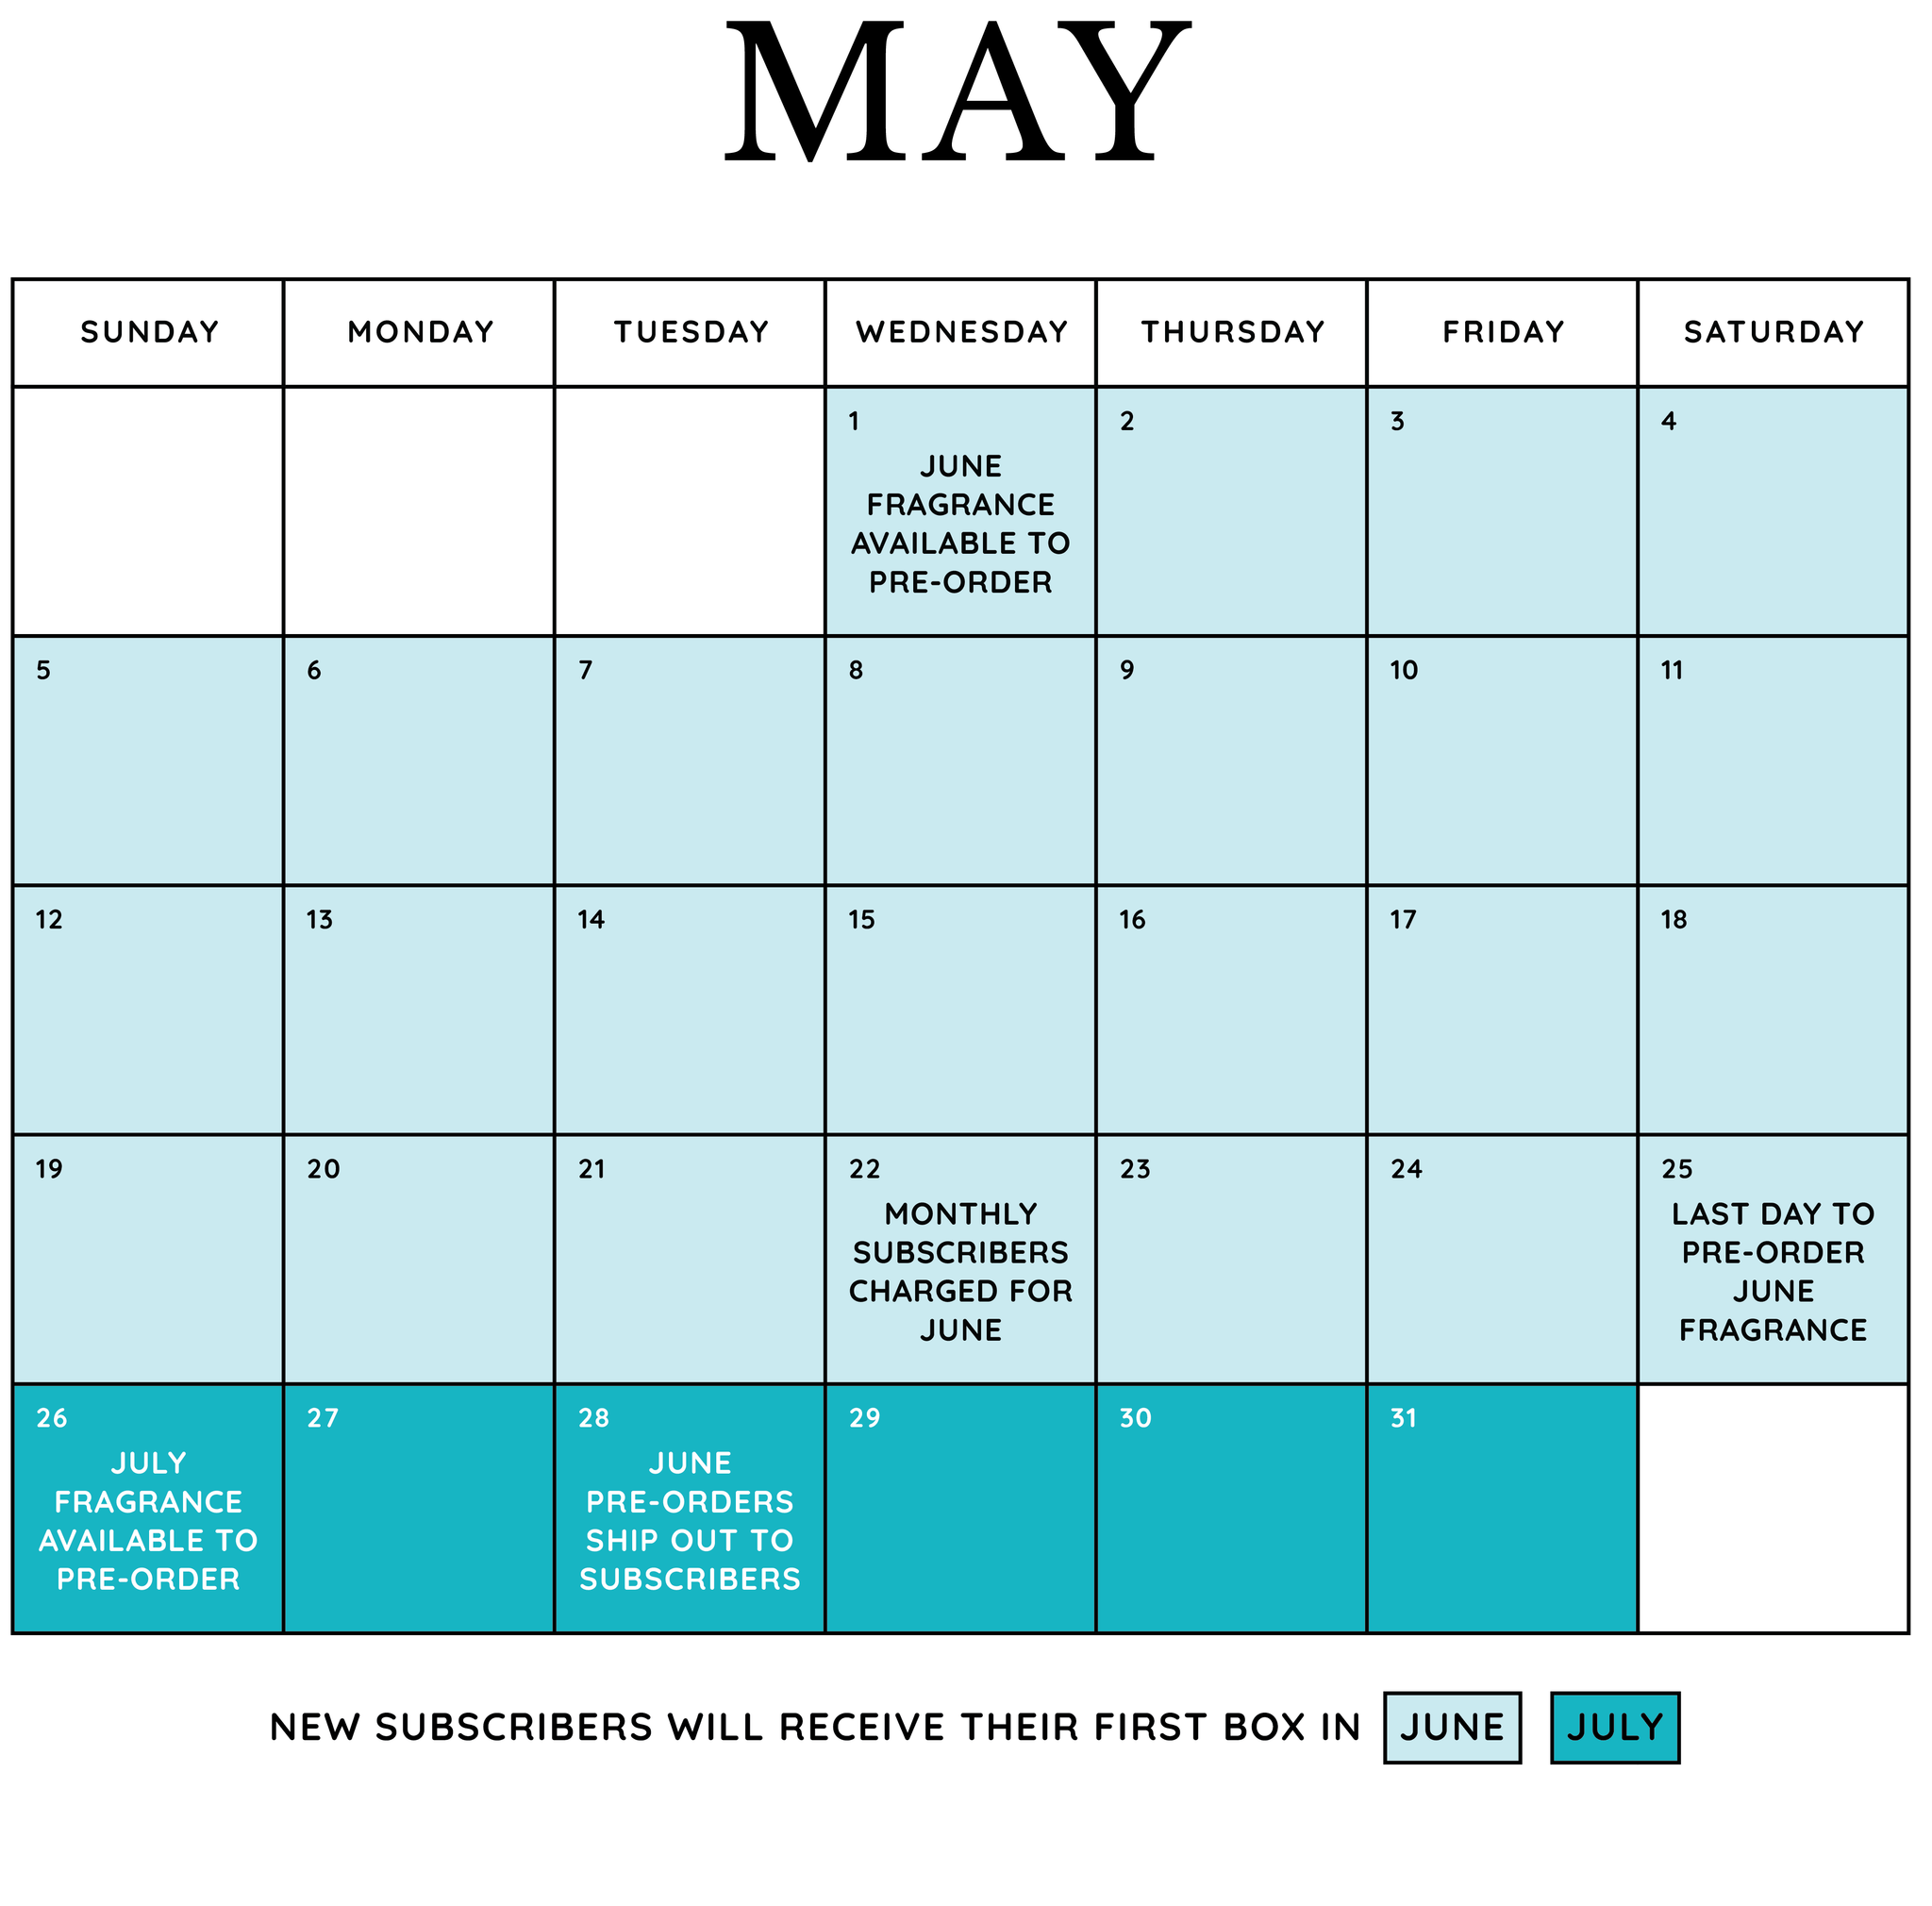 May subscription calendar